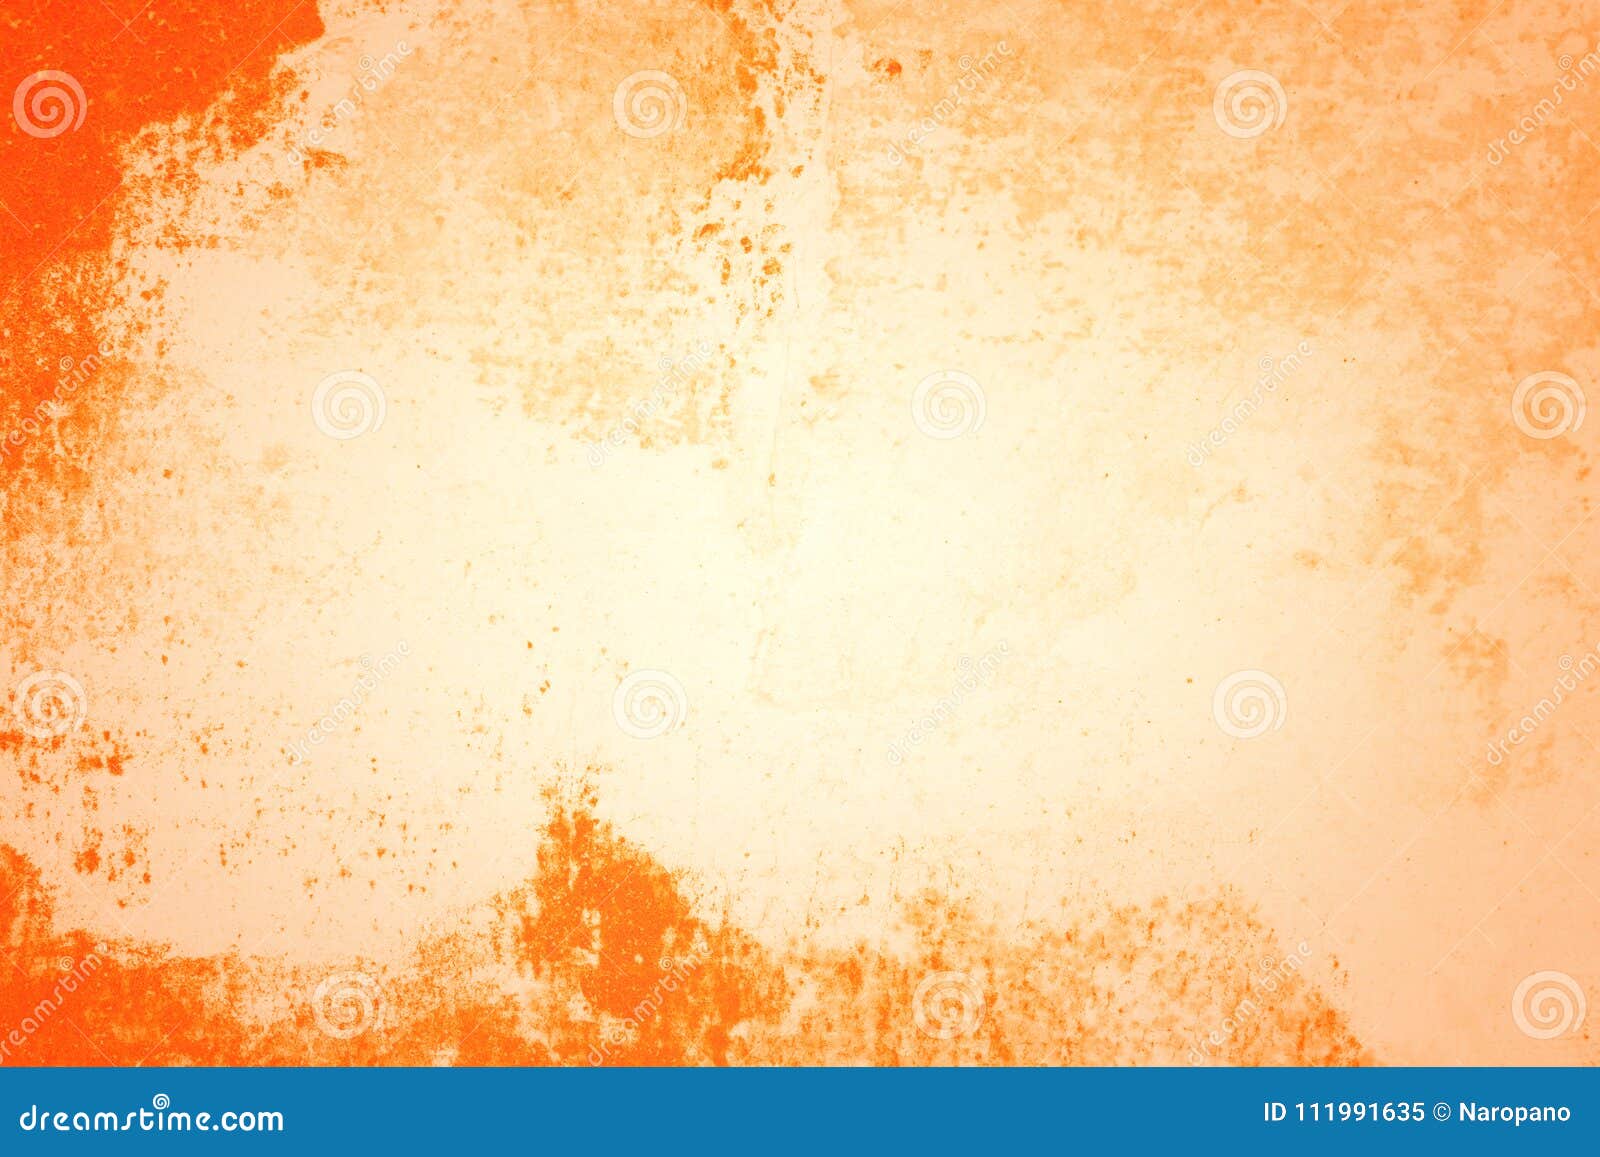 Orange Abstract Background Texture. Blank for Design, Dark Orange Edges  Stock Image - Image of flame, construction: 111991635